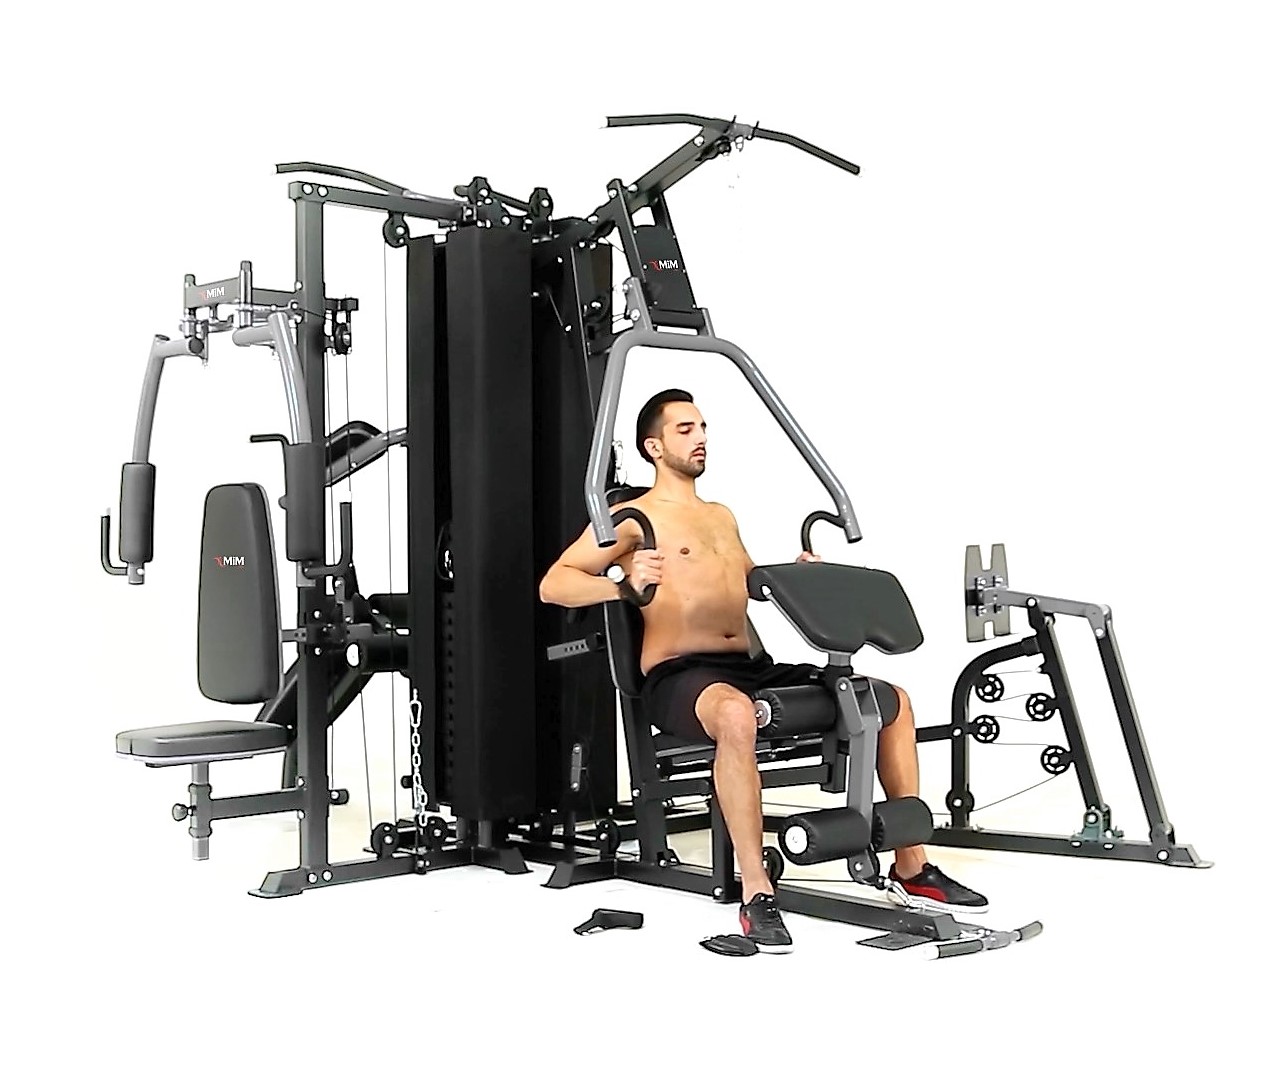 MiM USA Giant 1001, Multi Station Gym Trainer All-in-One Gym Machine ( 5  Station) - MiM USA Power Rack Home Gym